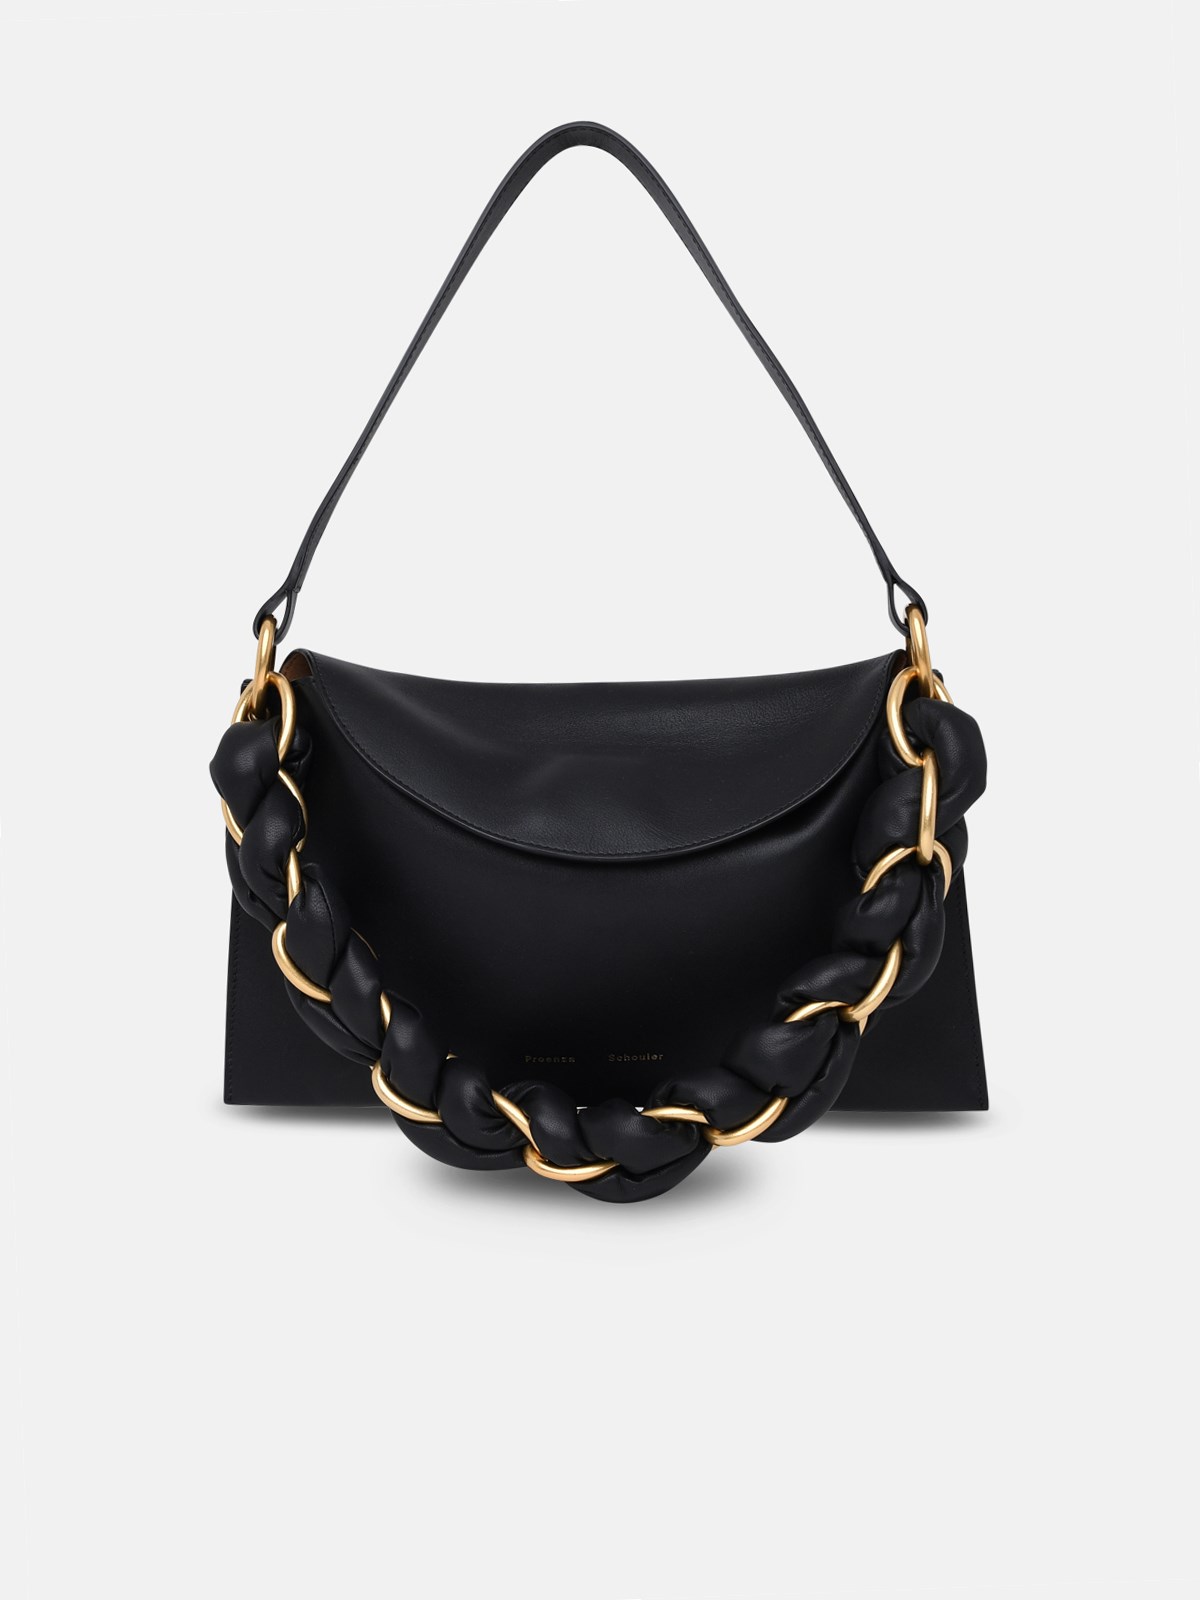 Proenza Schouler Braid Bag In Black Leather